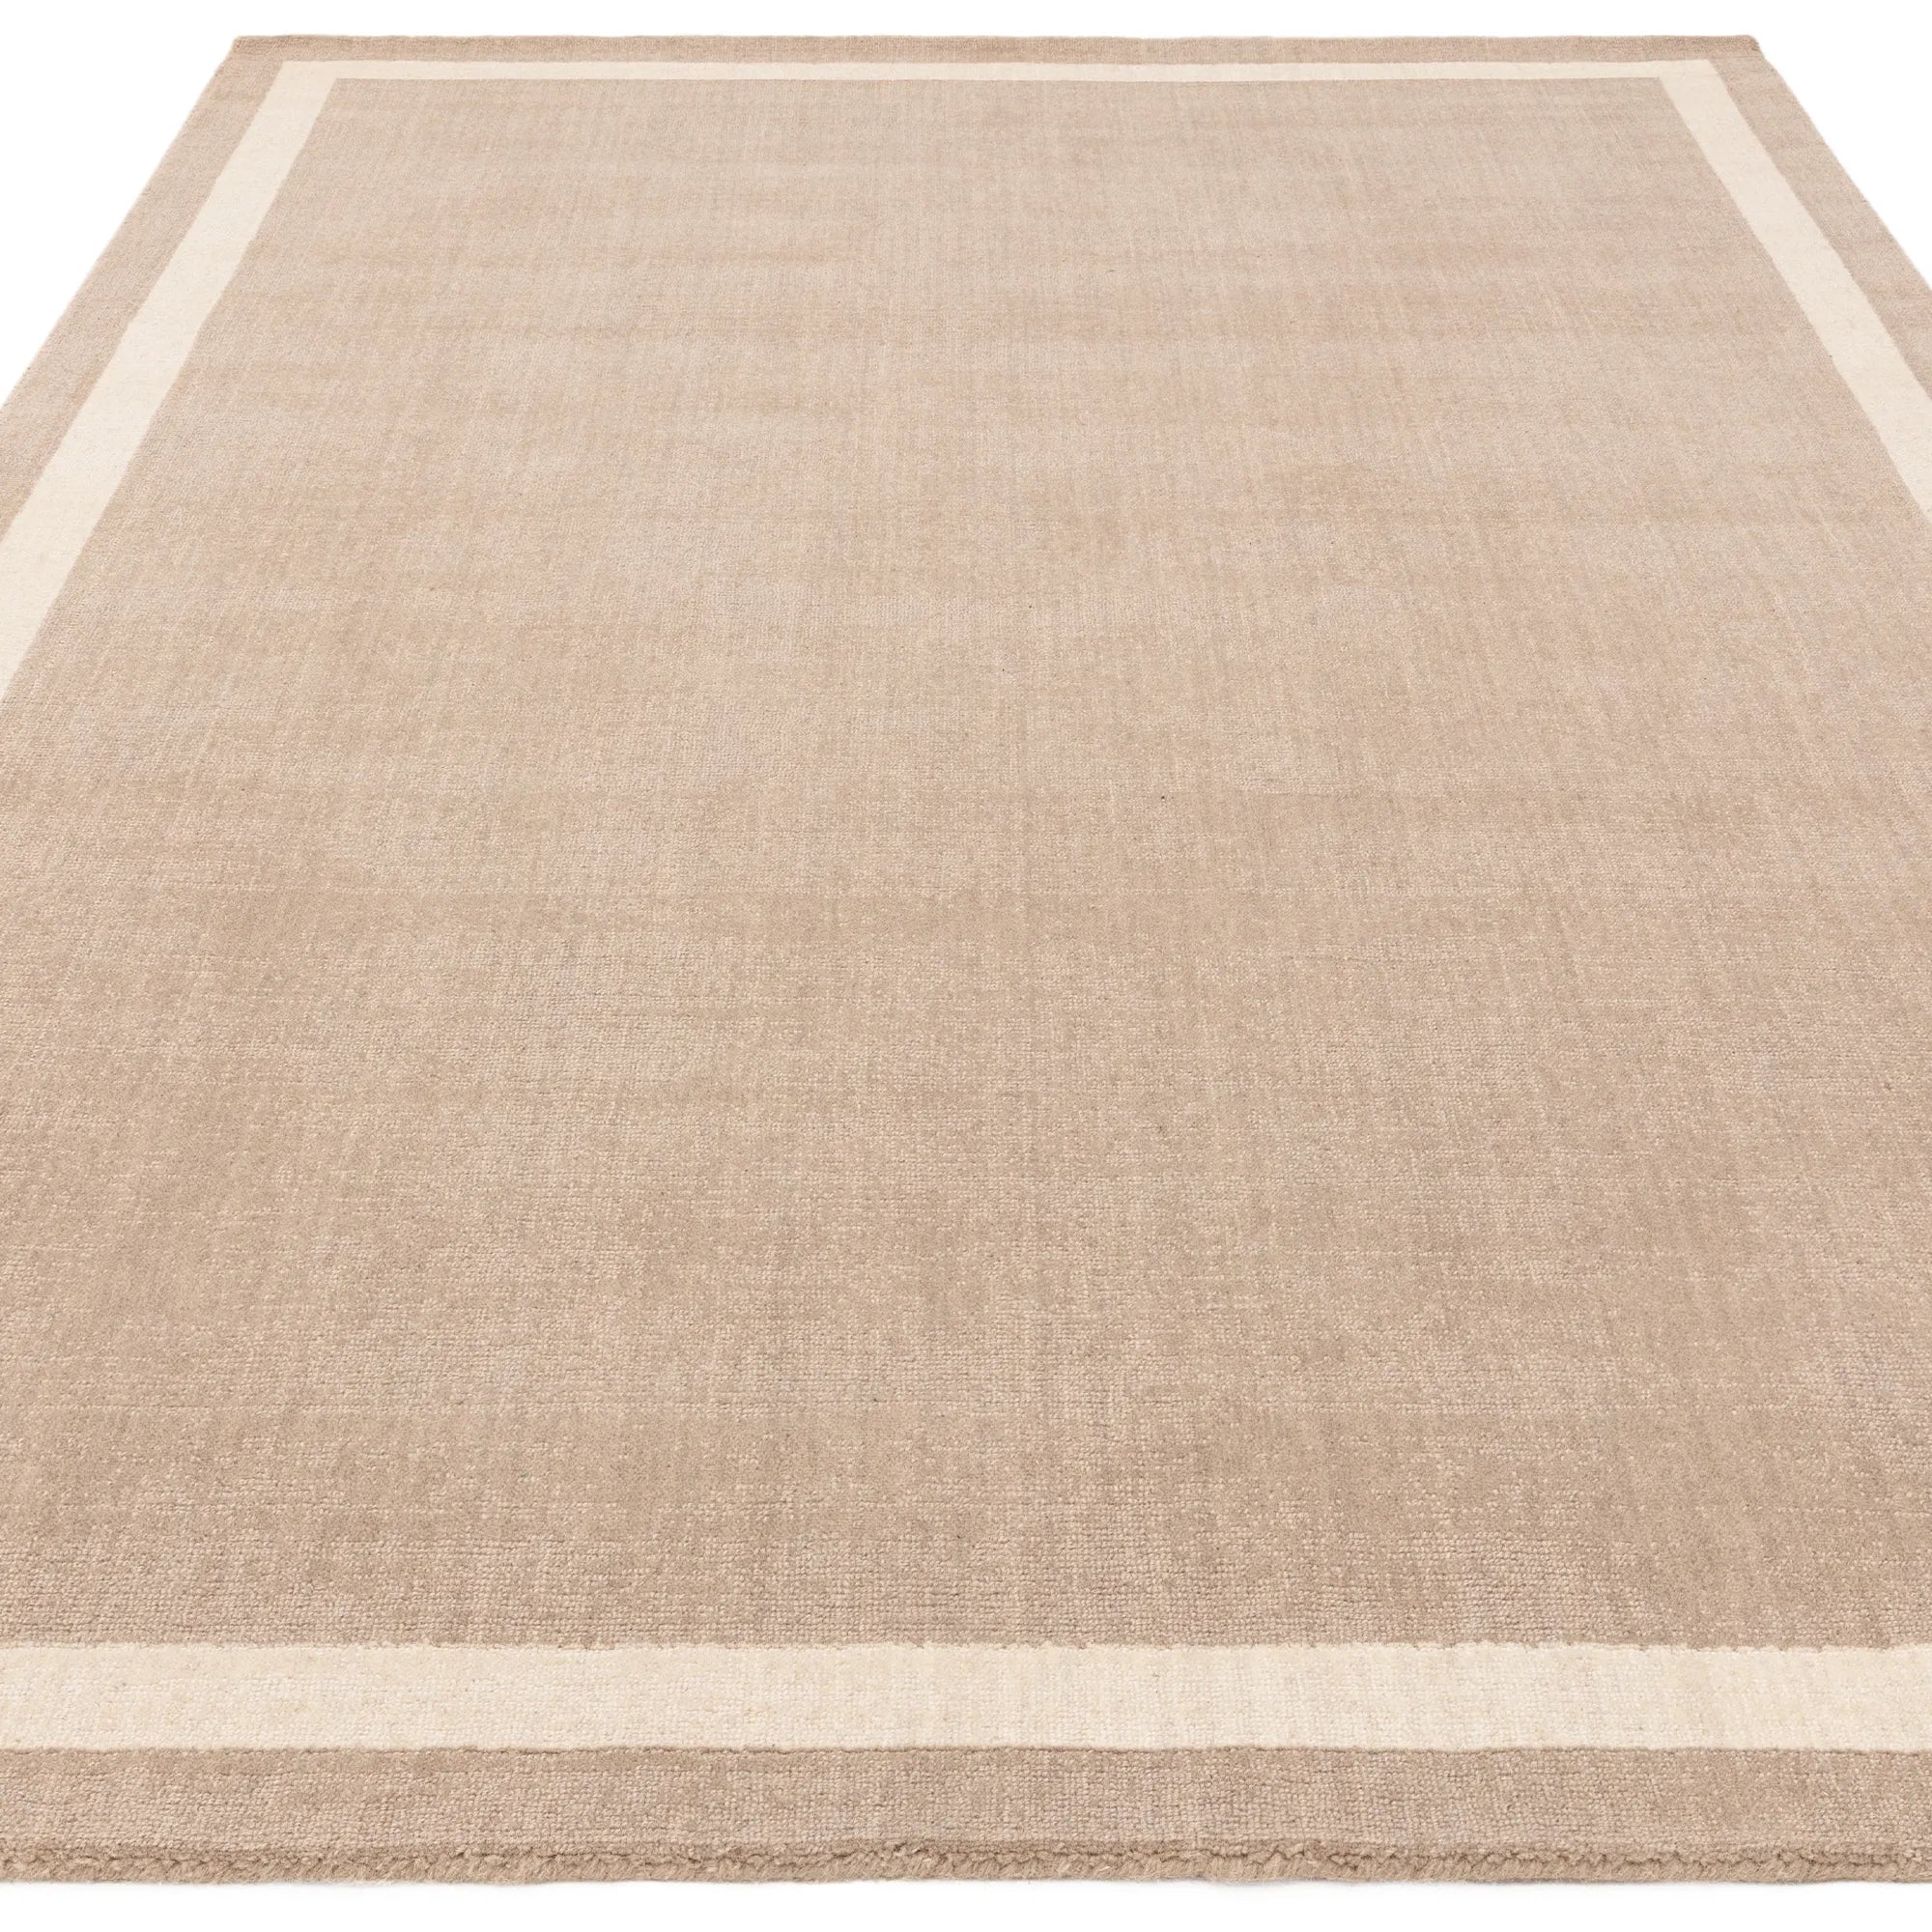 Modern beige border style rug